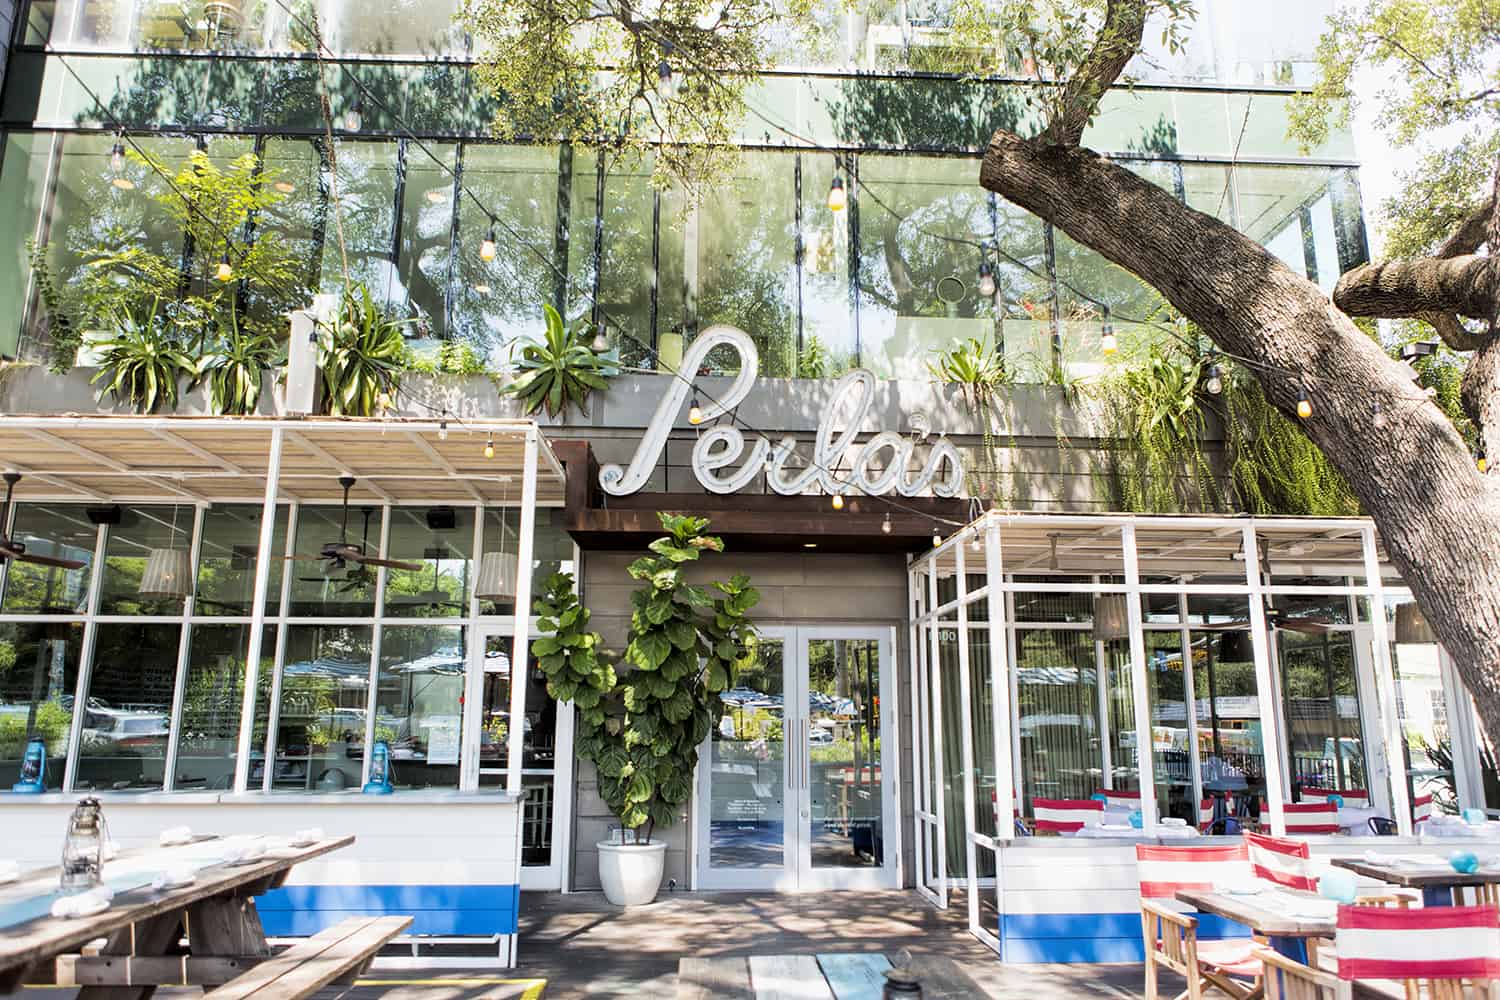 Perla's Restaurant | dog friendly restaurants in Austin